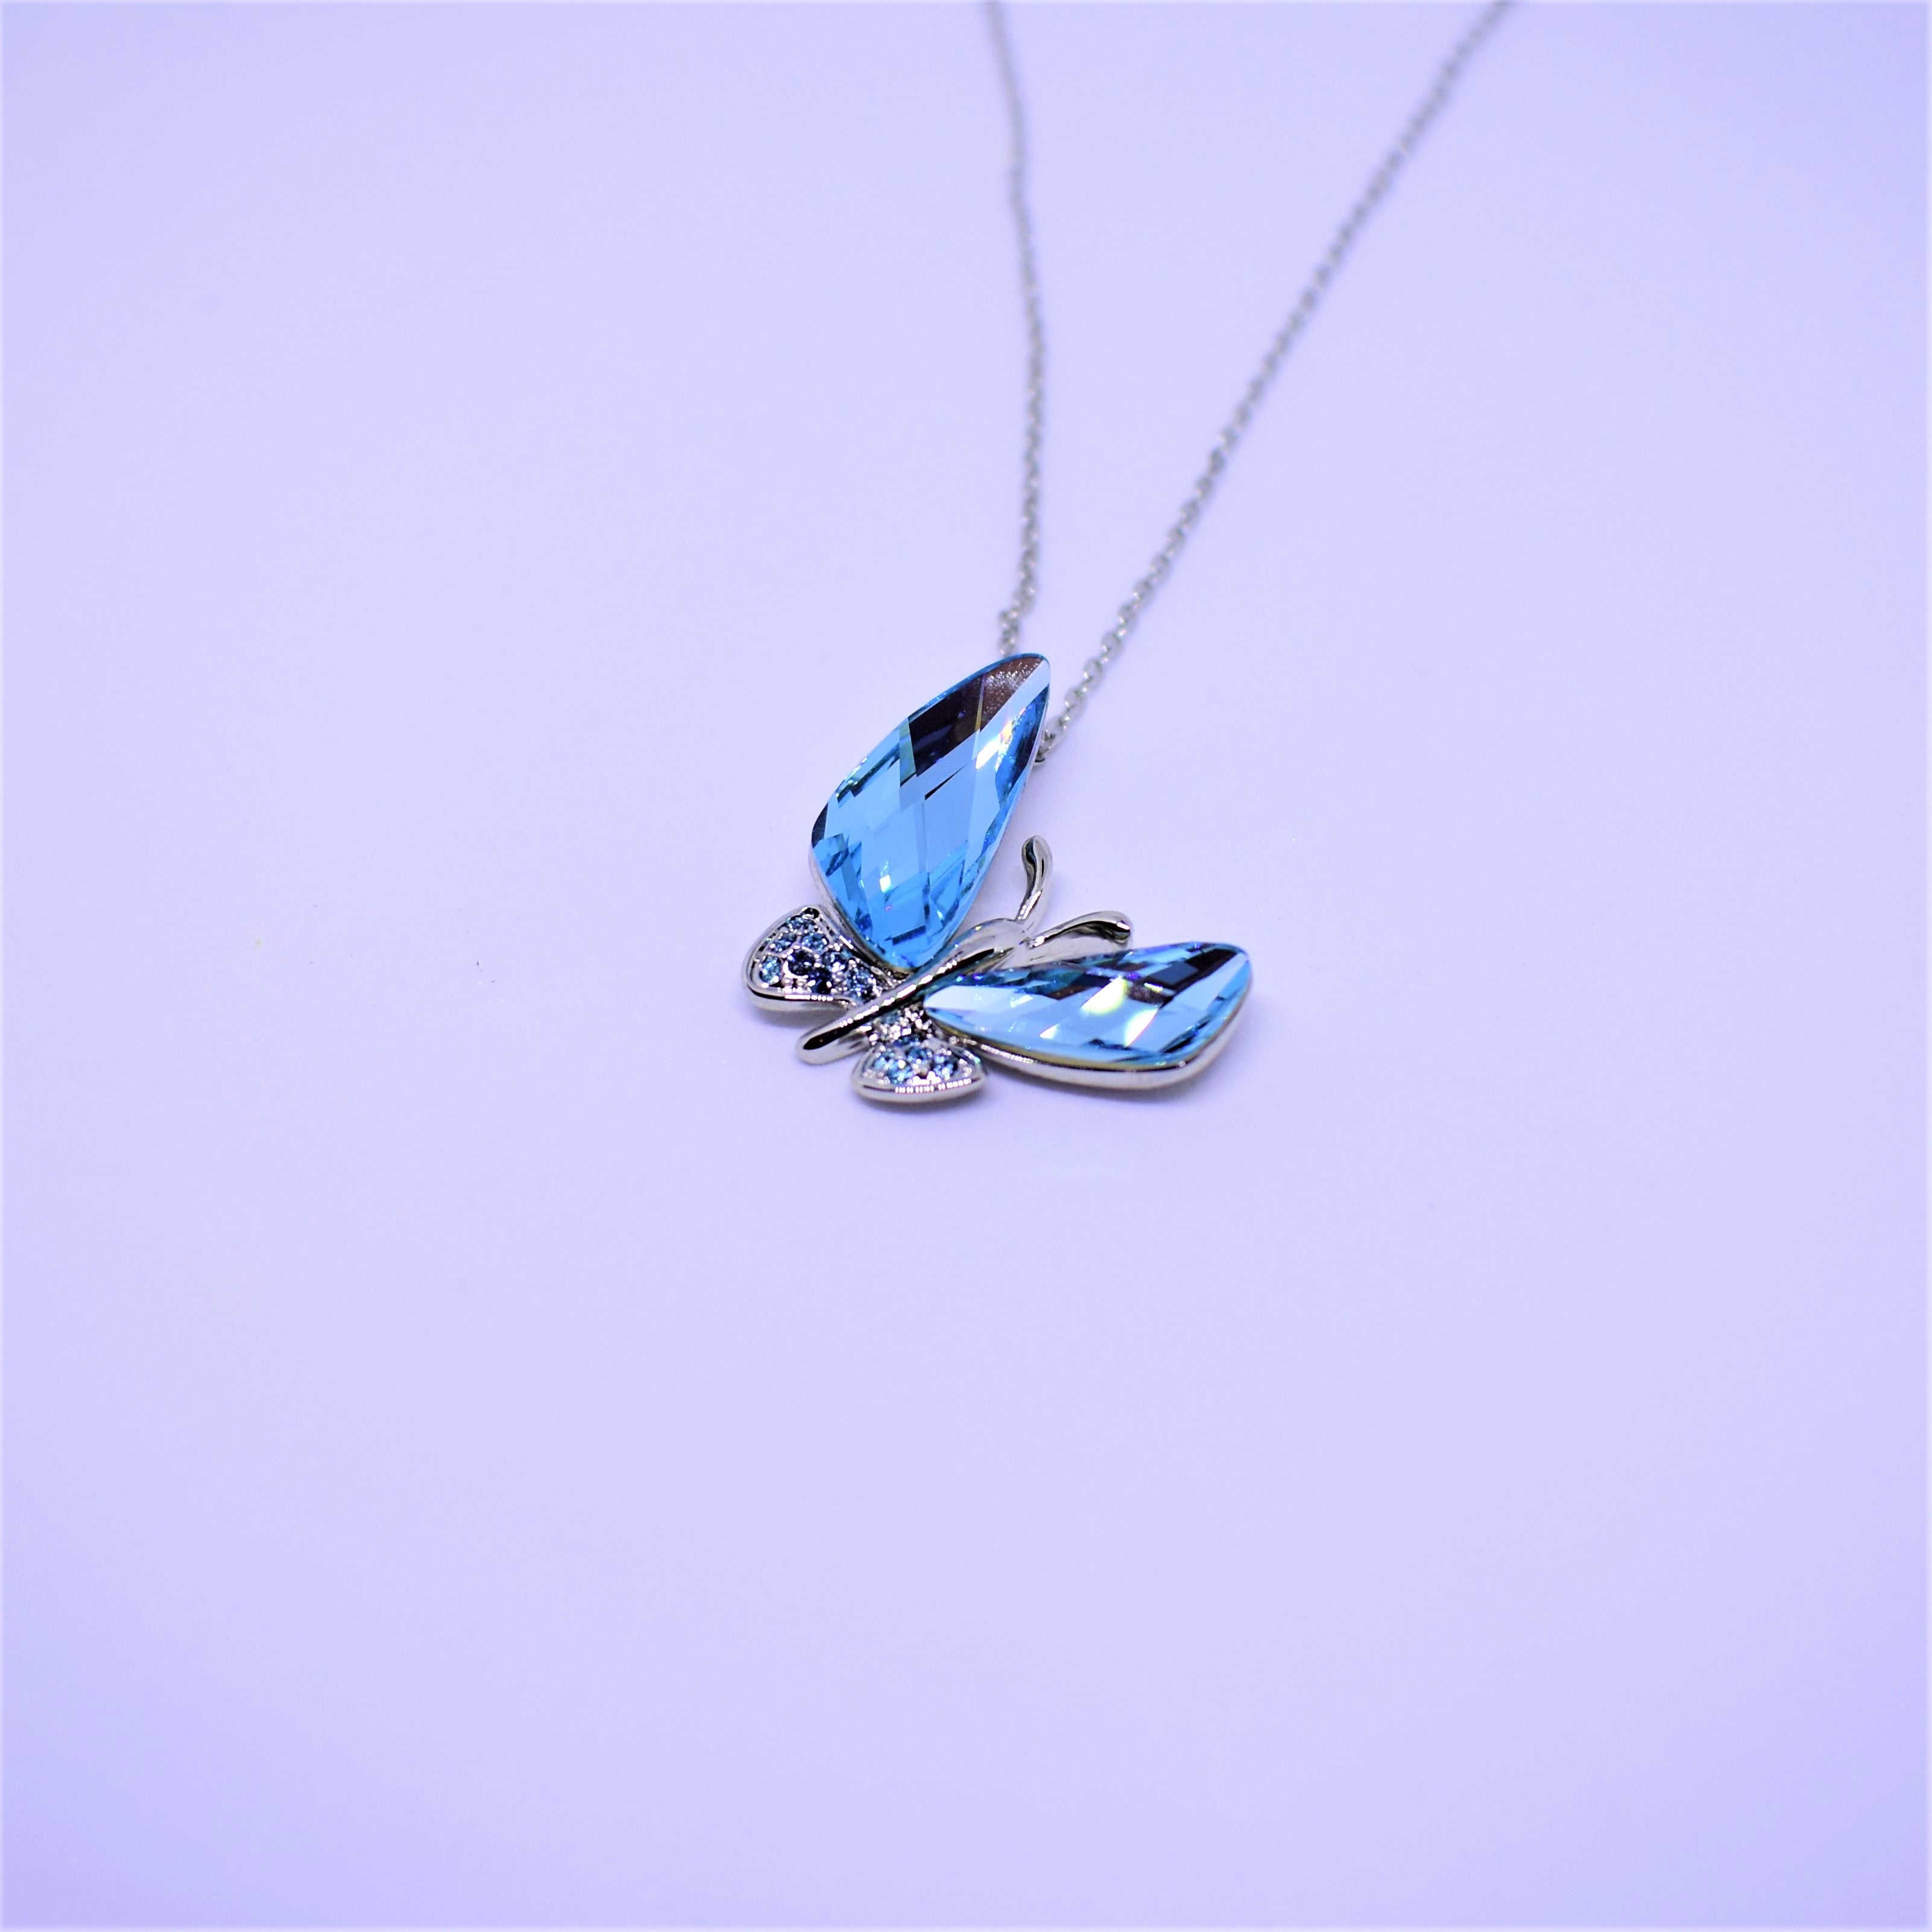 Colorful Butterfly Swarovski Crystal Silver Necklace – Mystic Flavia